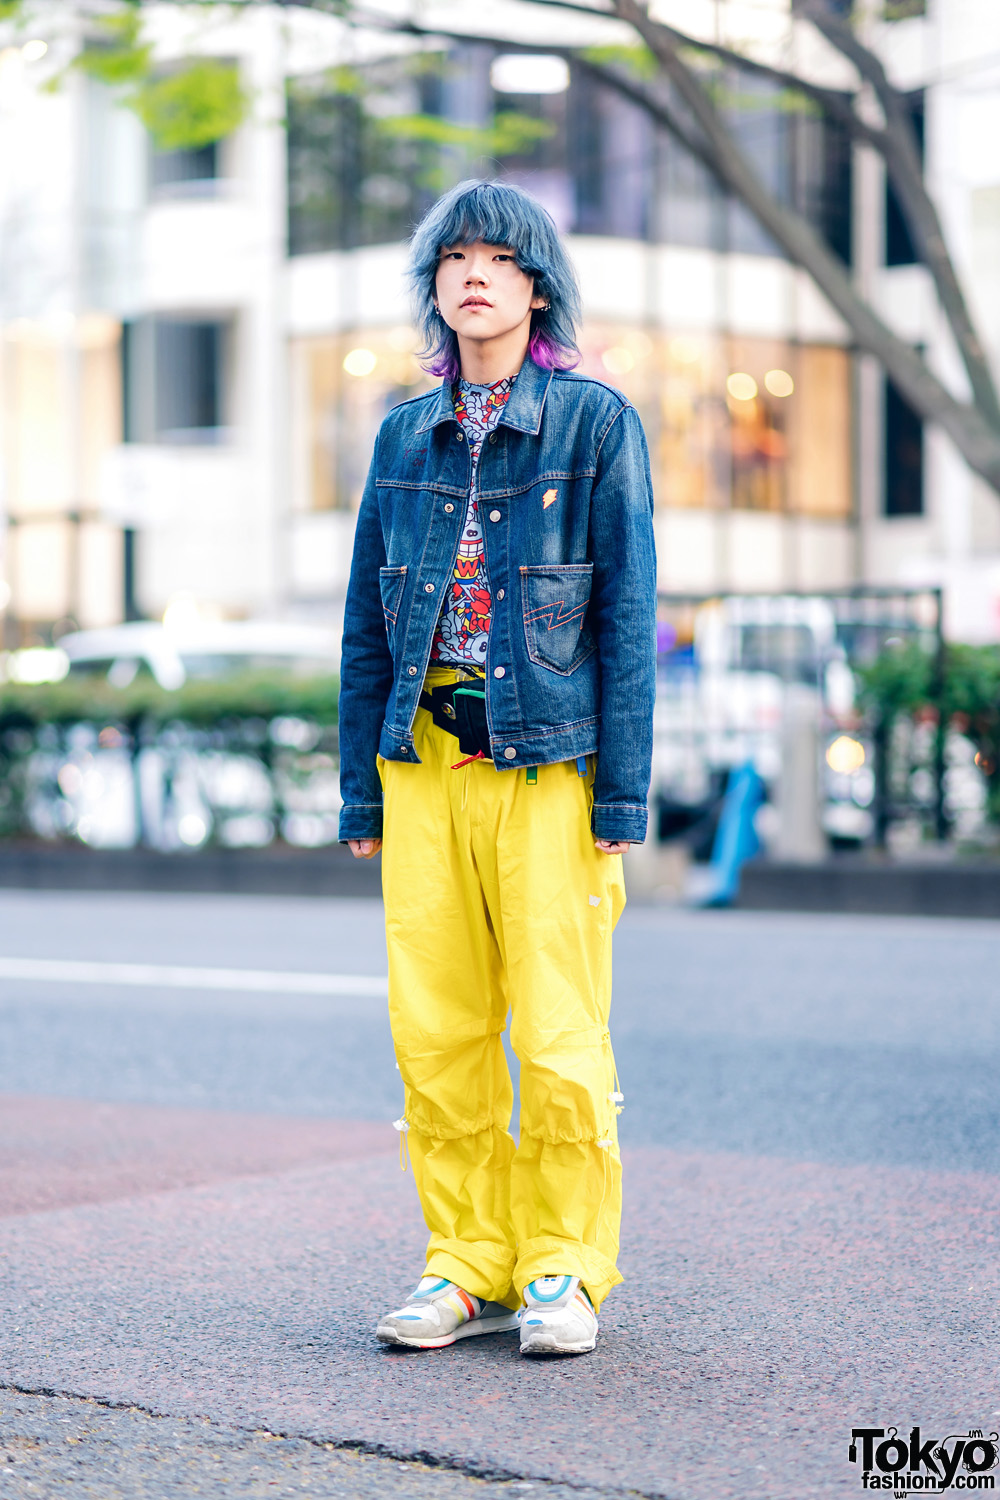 Two-Tone Shaggy Hair, W< Denim Jacket, Printed Shirt, Yellow Pants, Adidas Sneakers & Waist Bag